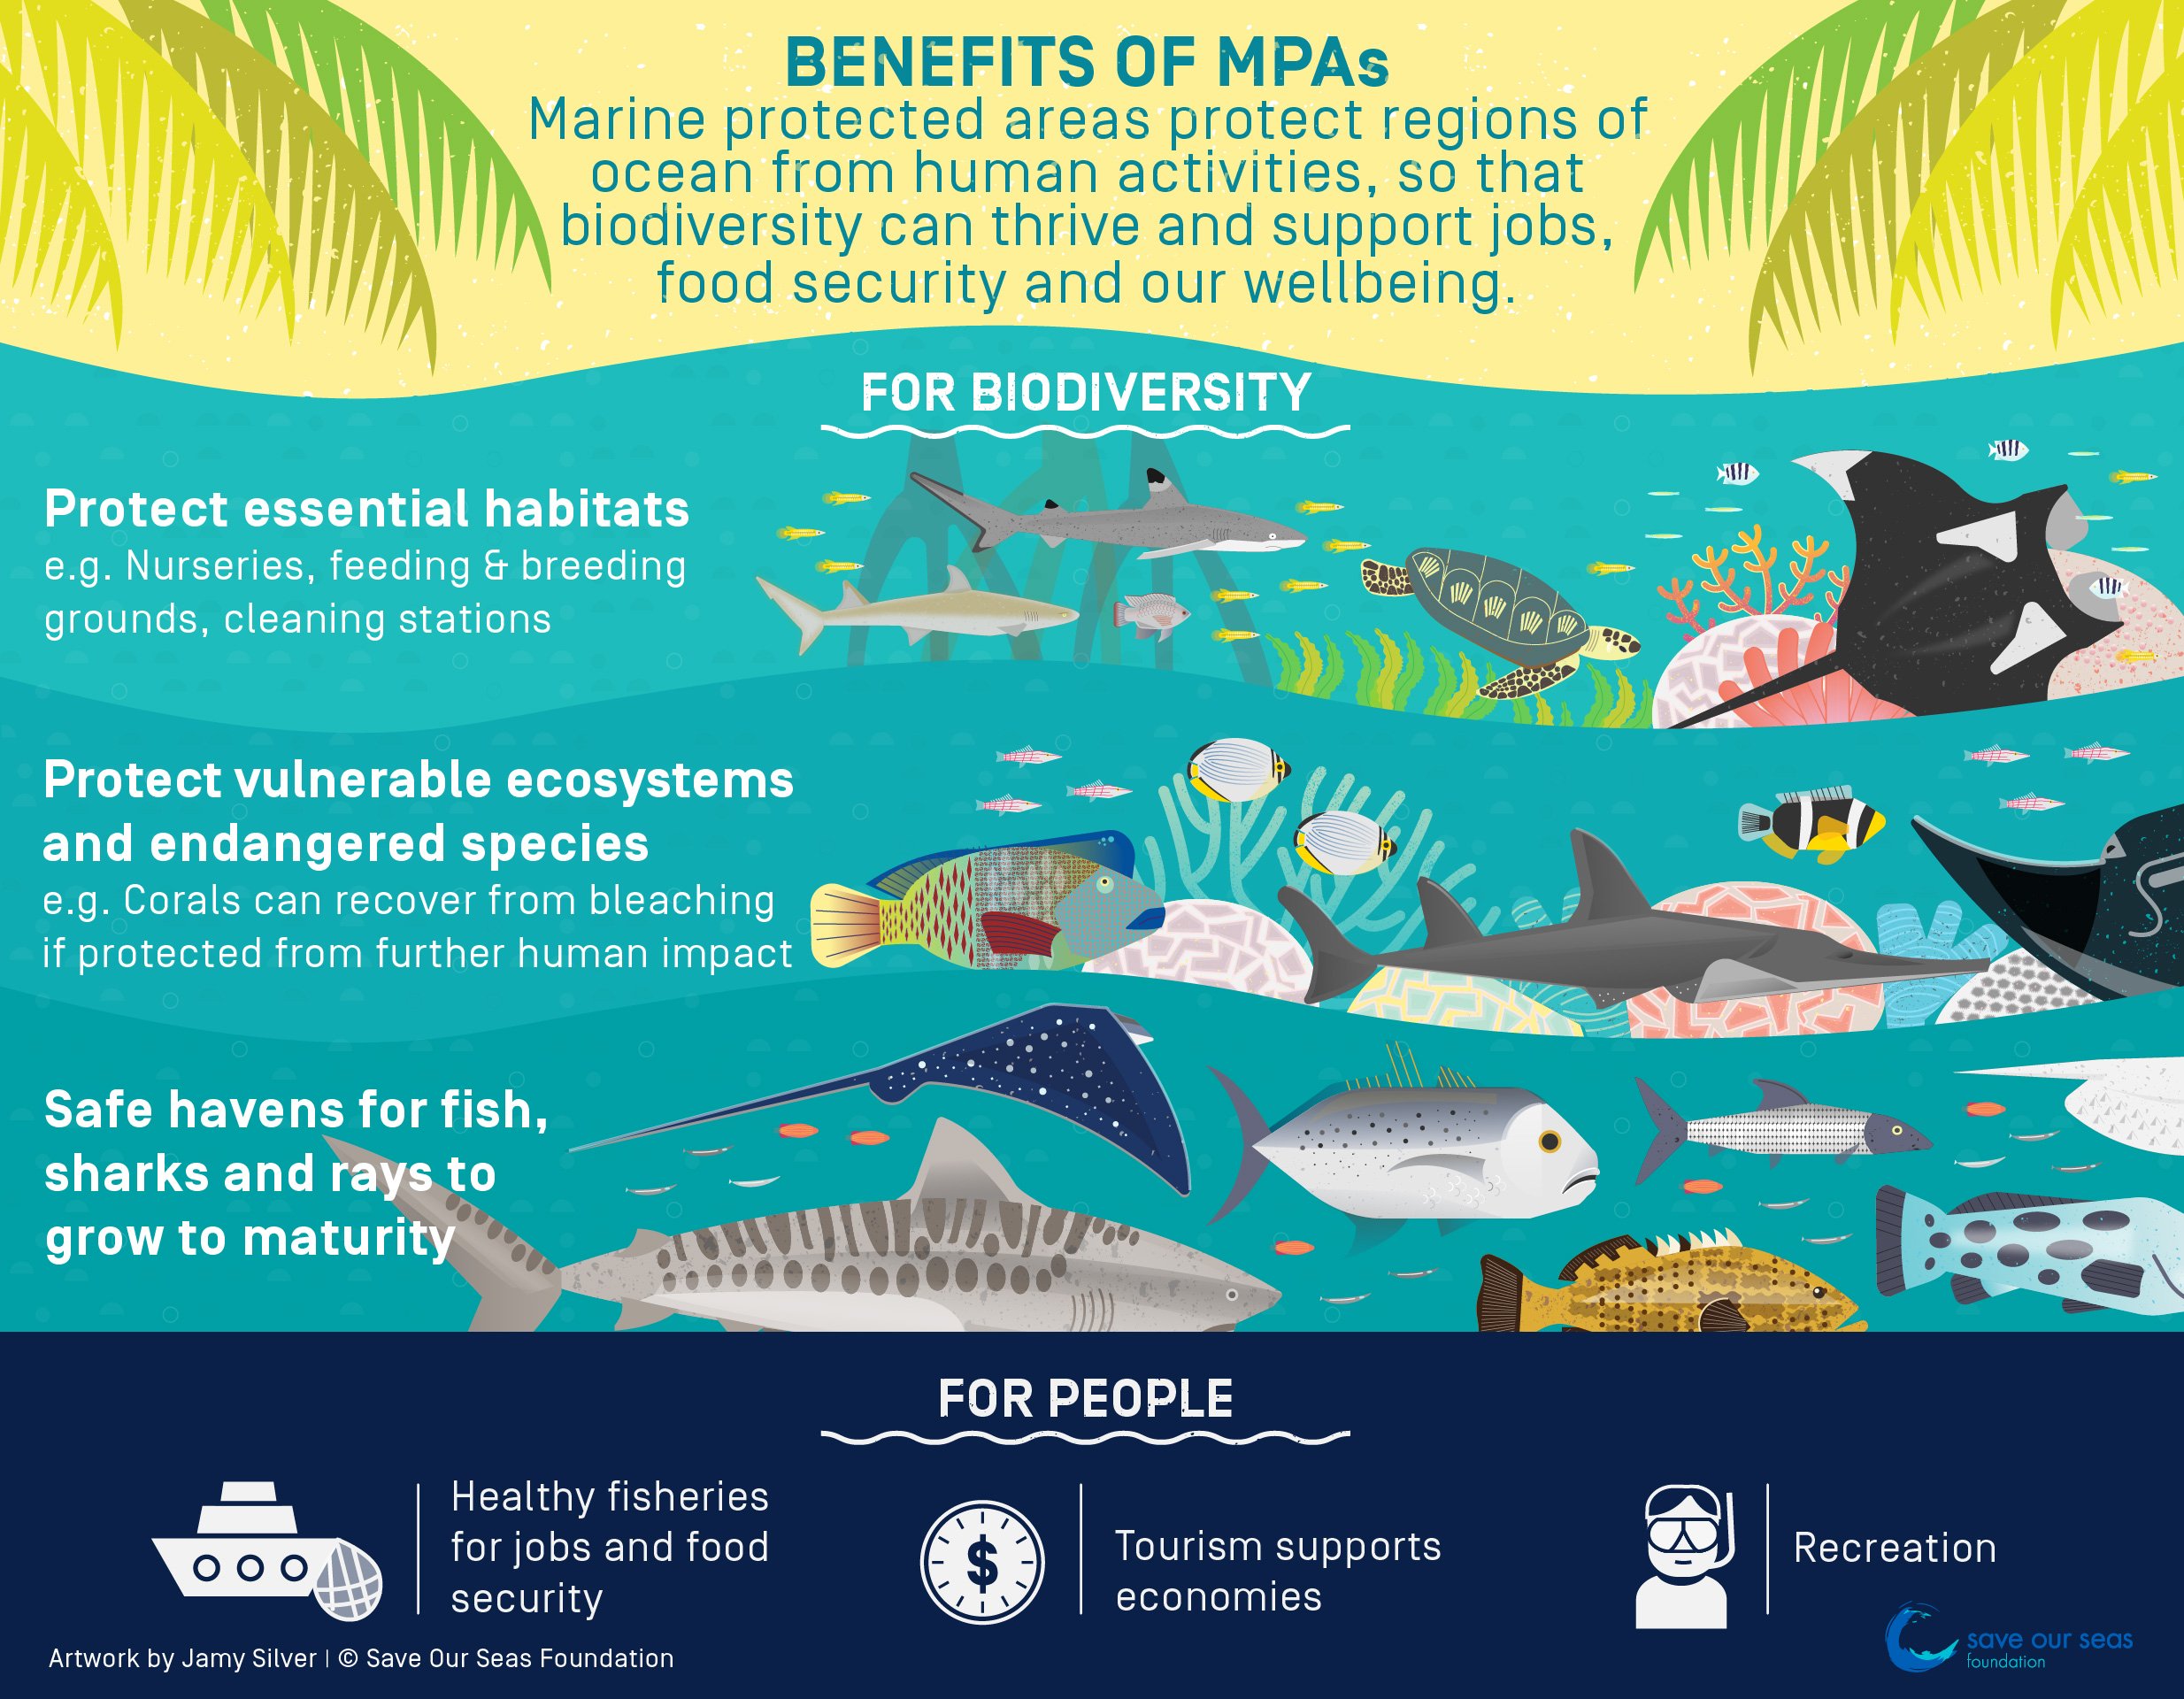 III. Benefits of Marine Protected Areas